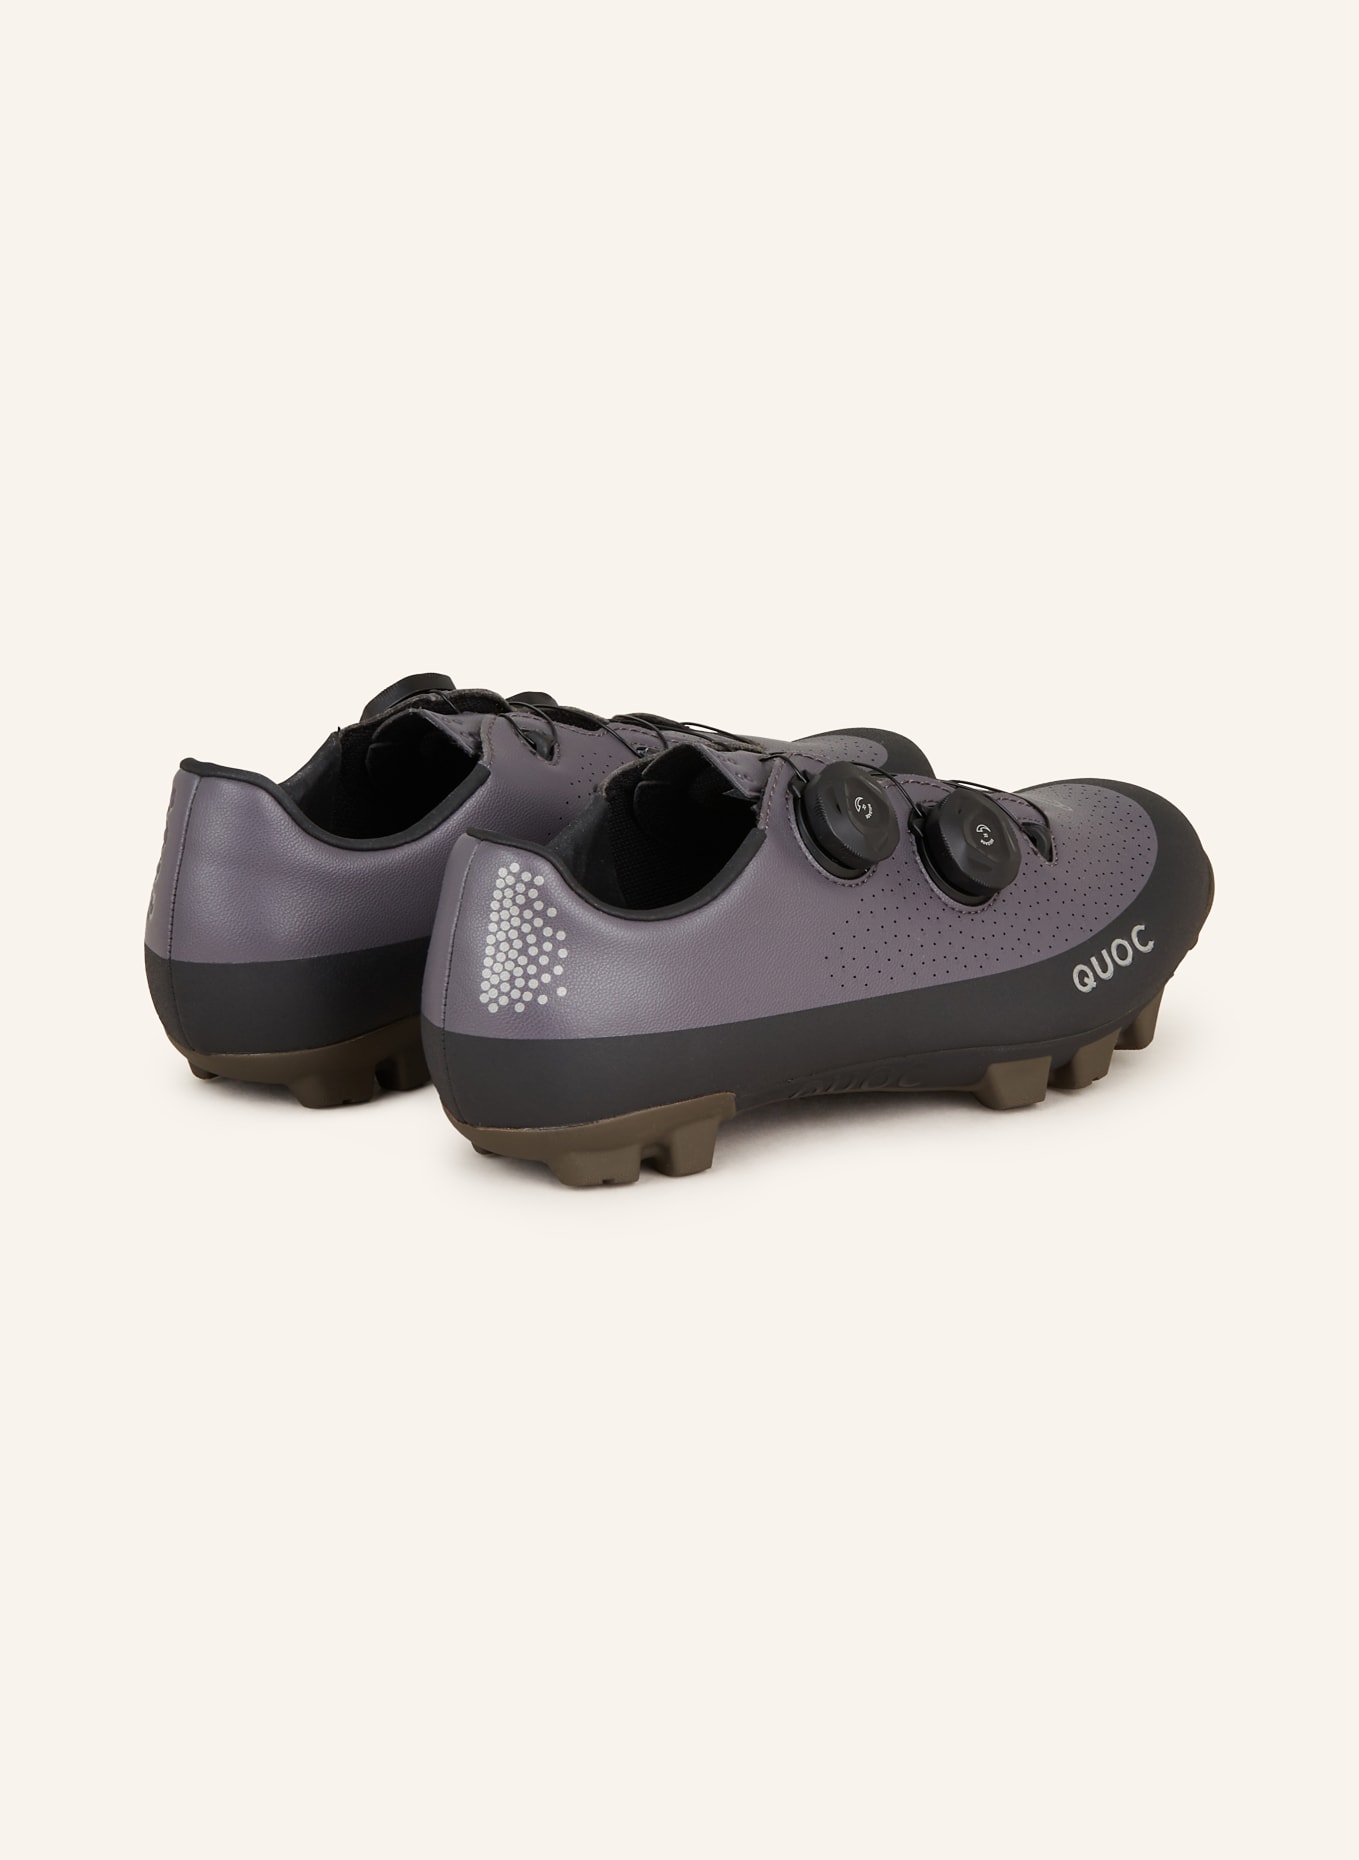 QUOC Gravel-Schuhe GRAN TOURER XC, Farbe: GRAU/ SCHWARZ (Bild 2)